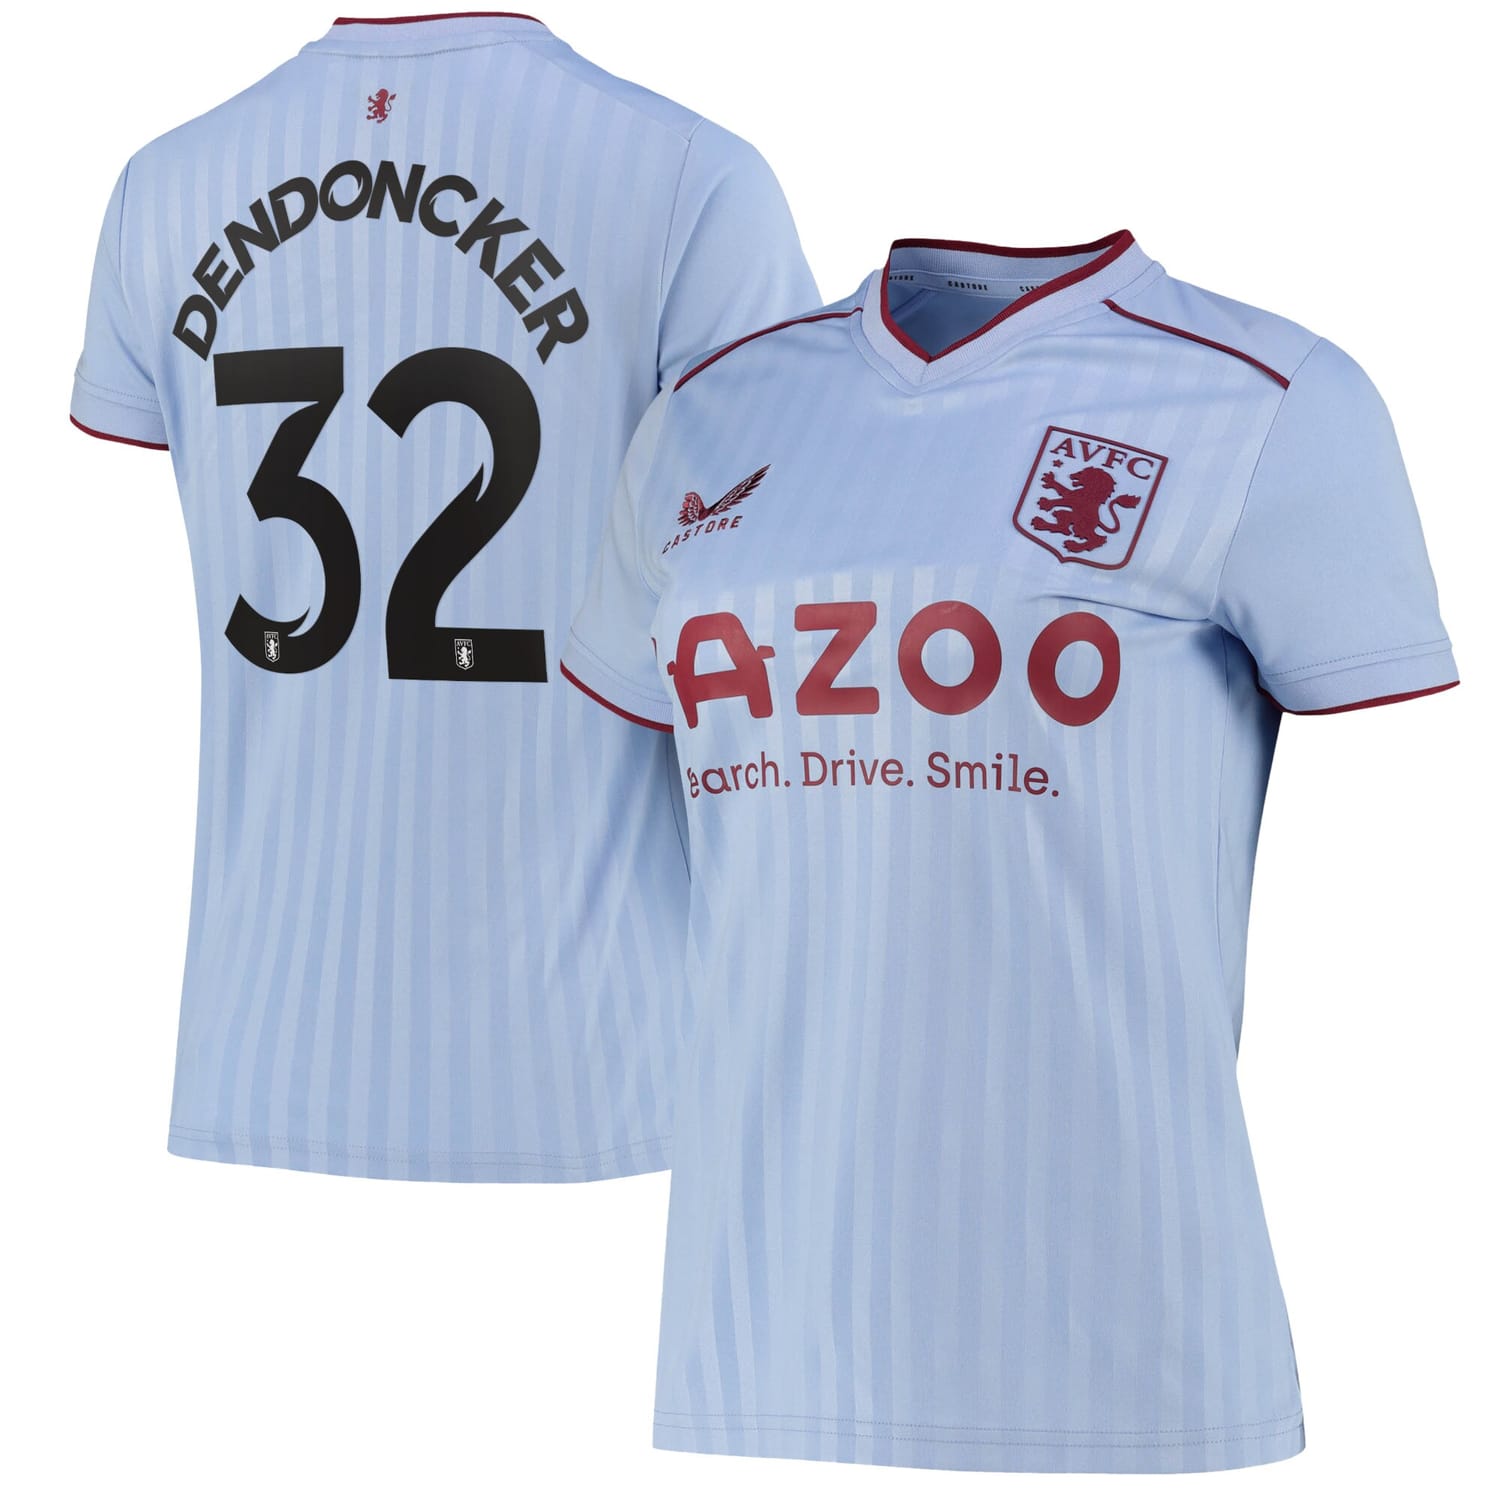 Premier League Aston Villa Away Cup Jersey Shirt 2022-23 player Leander Dendoncker 32 printing for Women